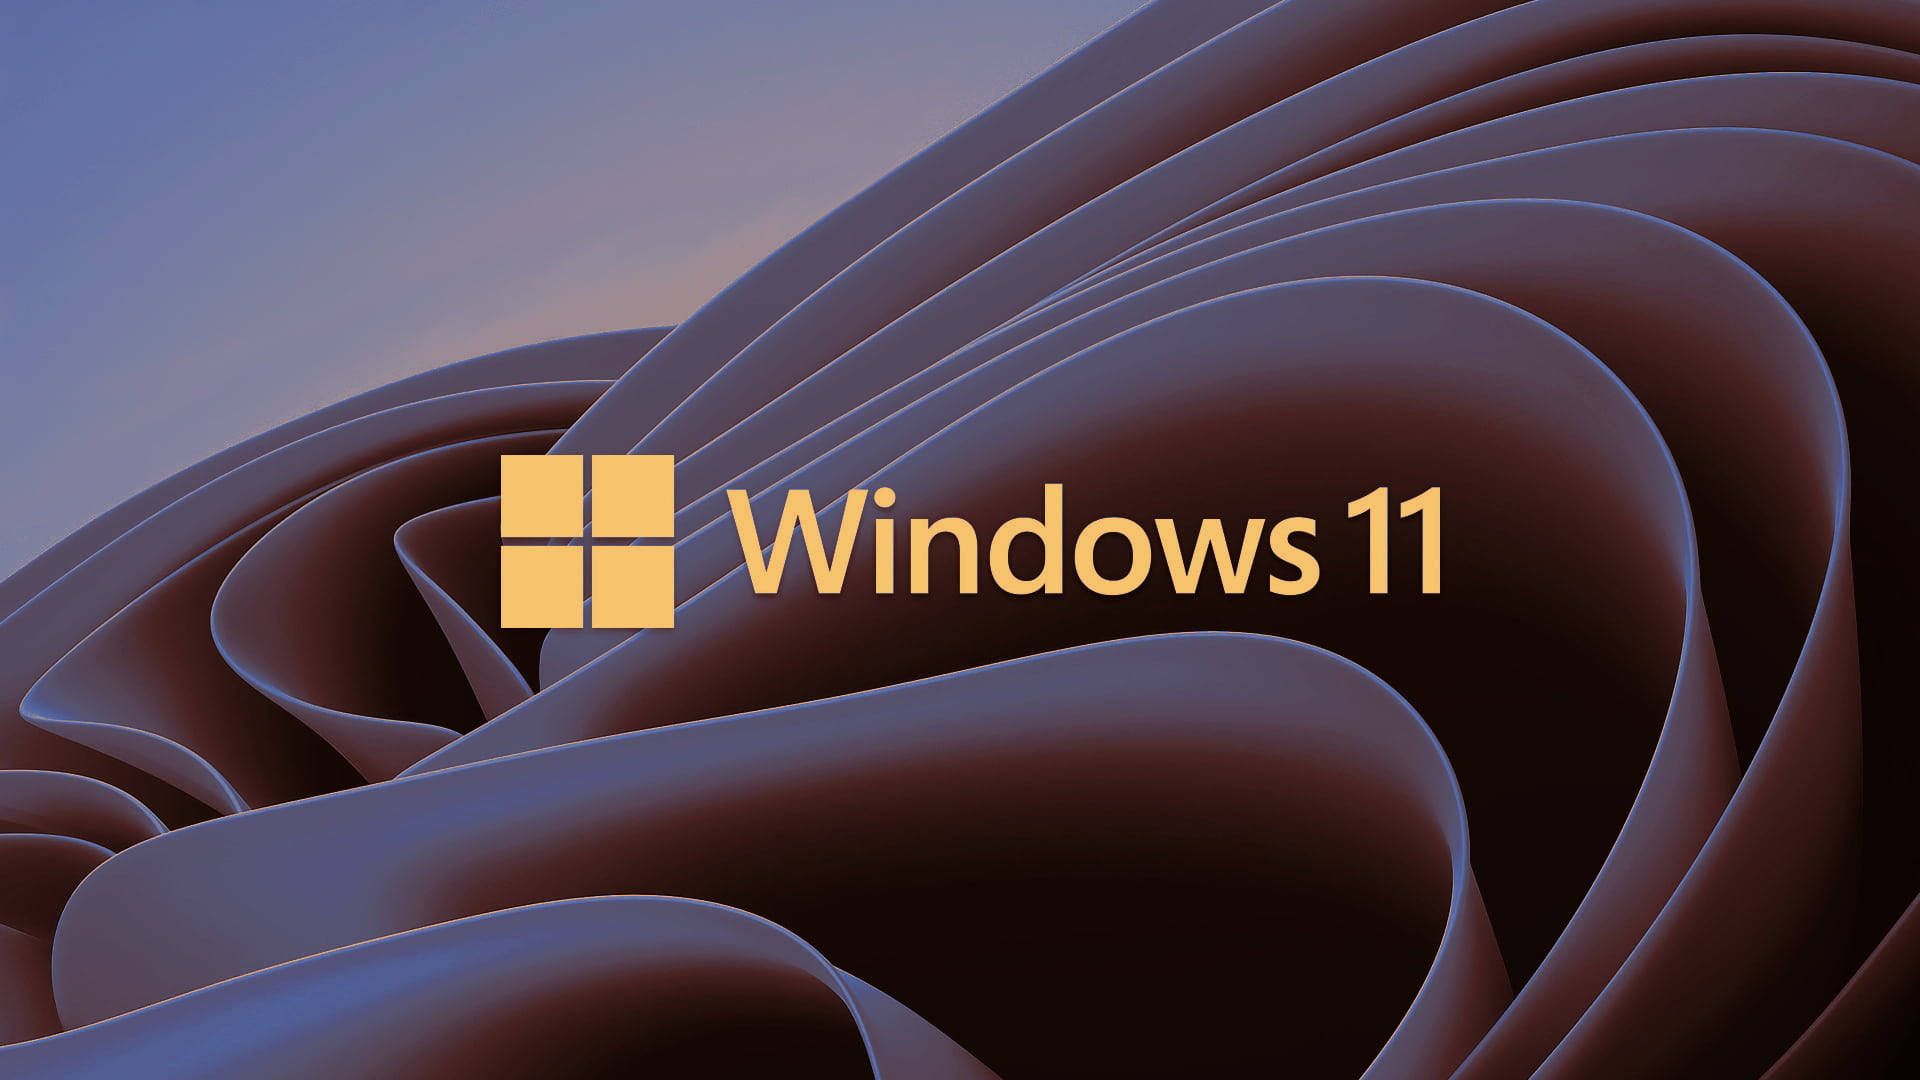  Windows 11 Hintergrundbild 1920x1080. Windows 11 Logo Wallpaper